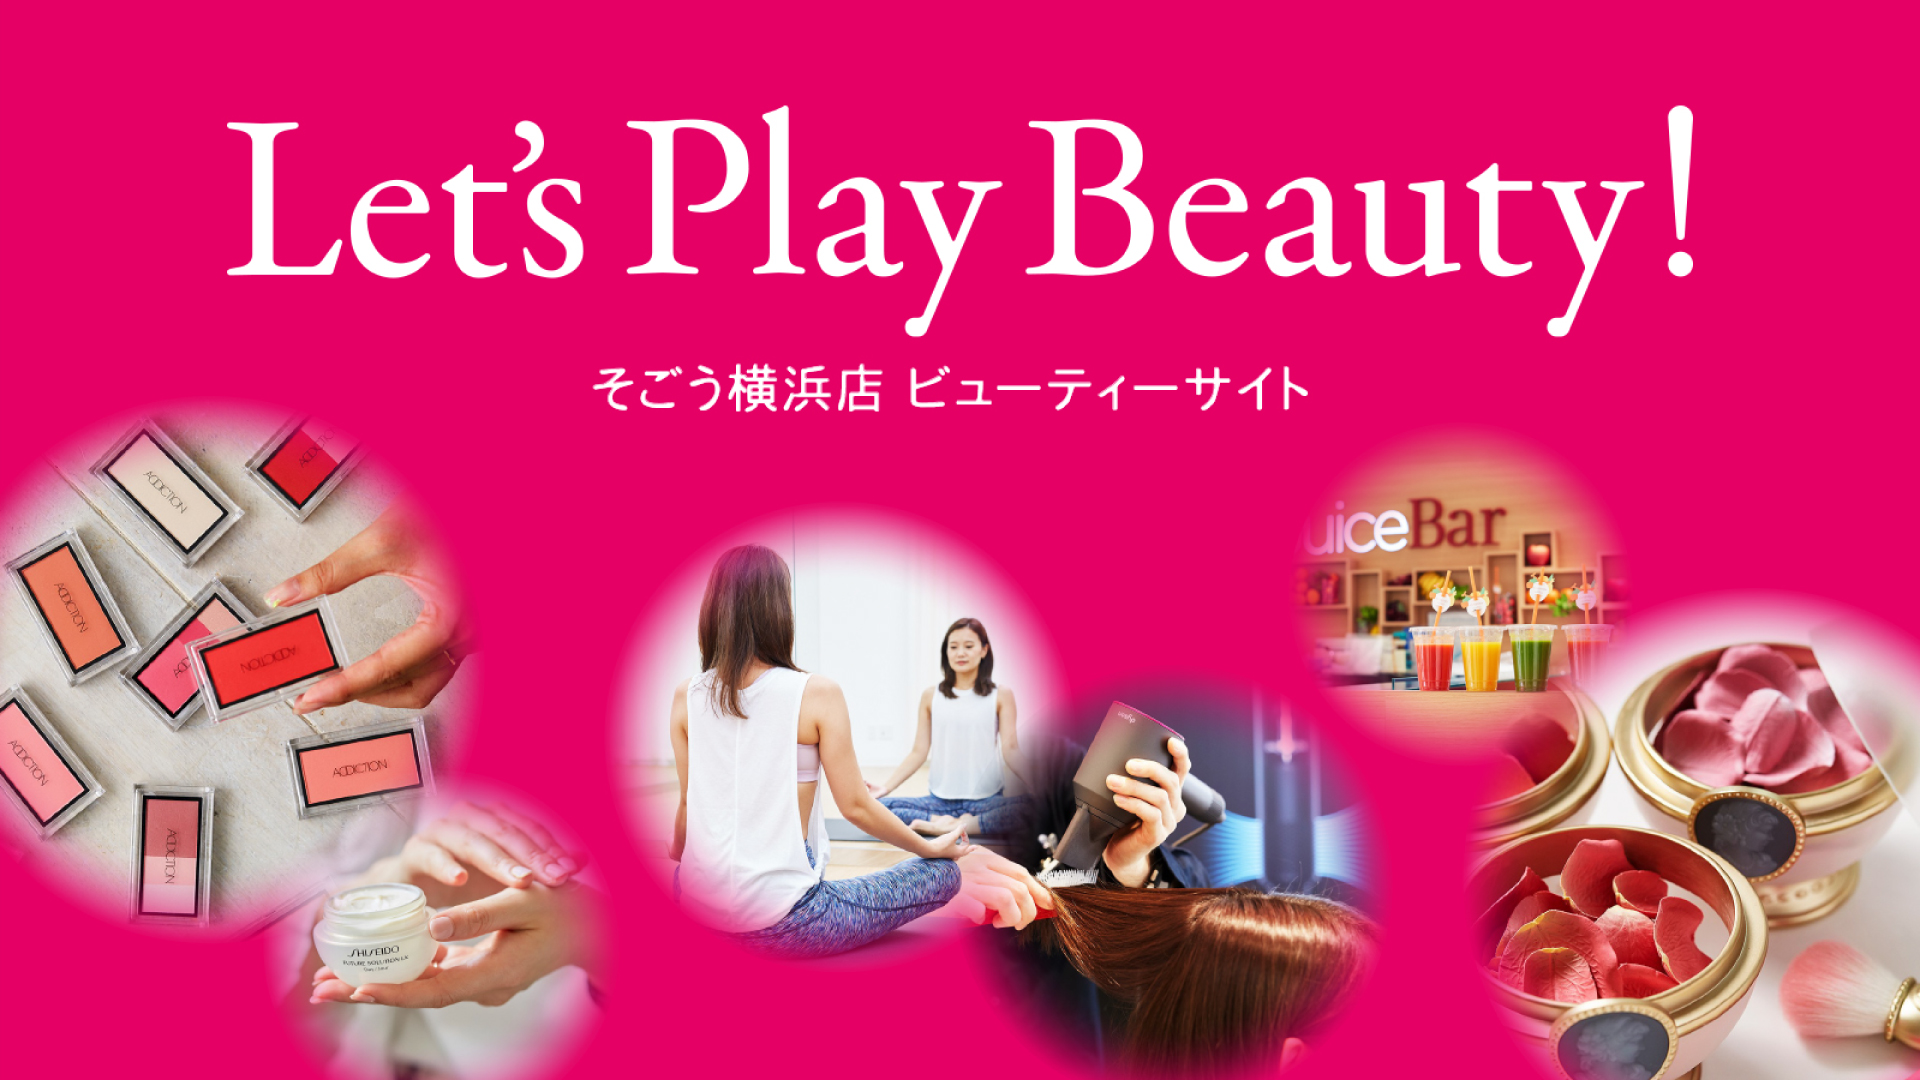 Let's Play Beauty! そごう横浜店 ビューティーサイト